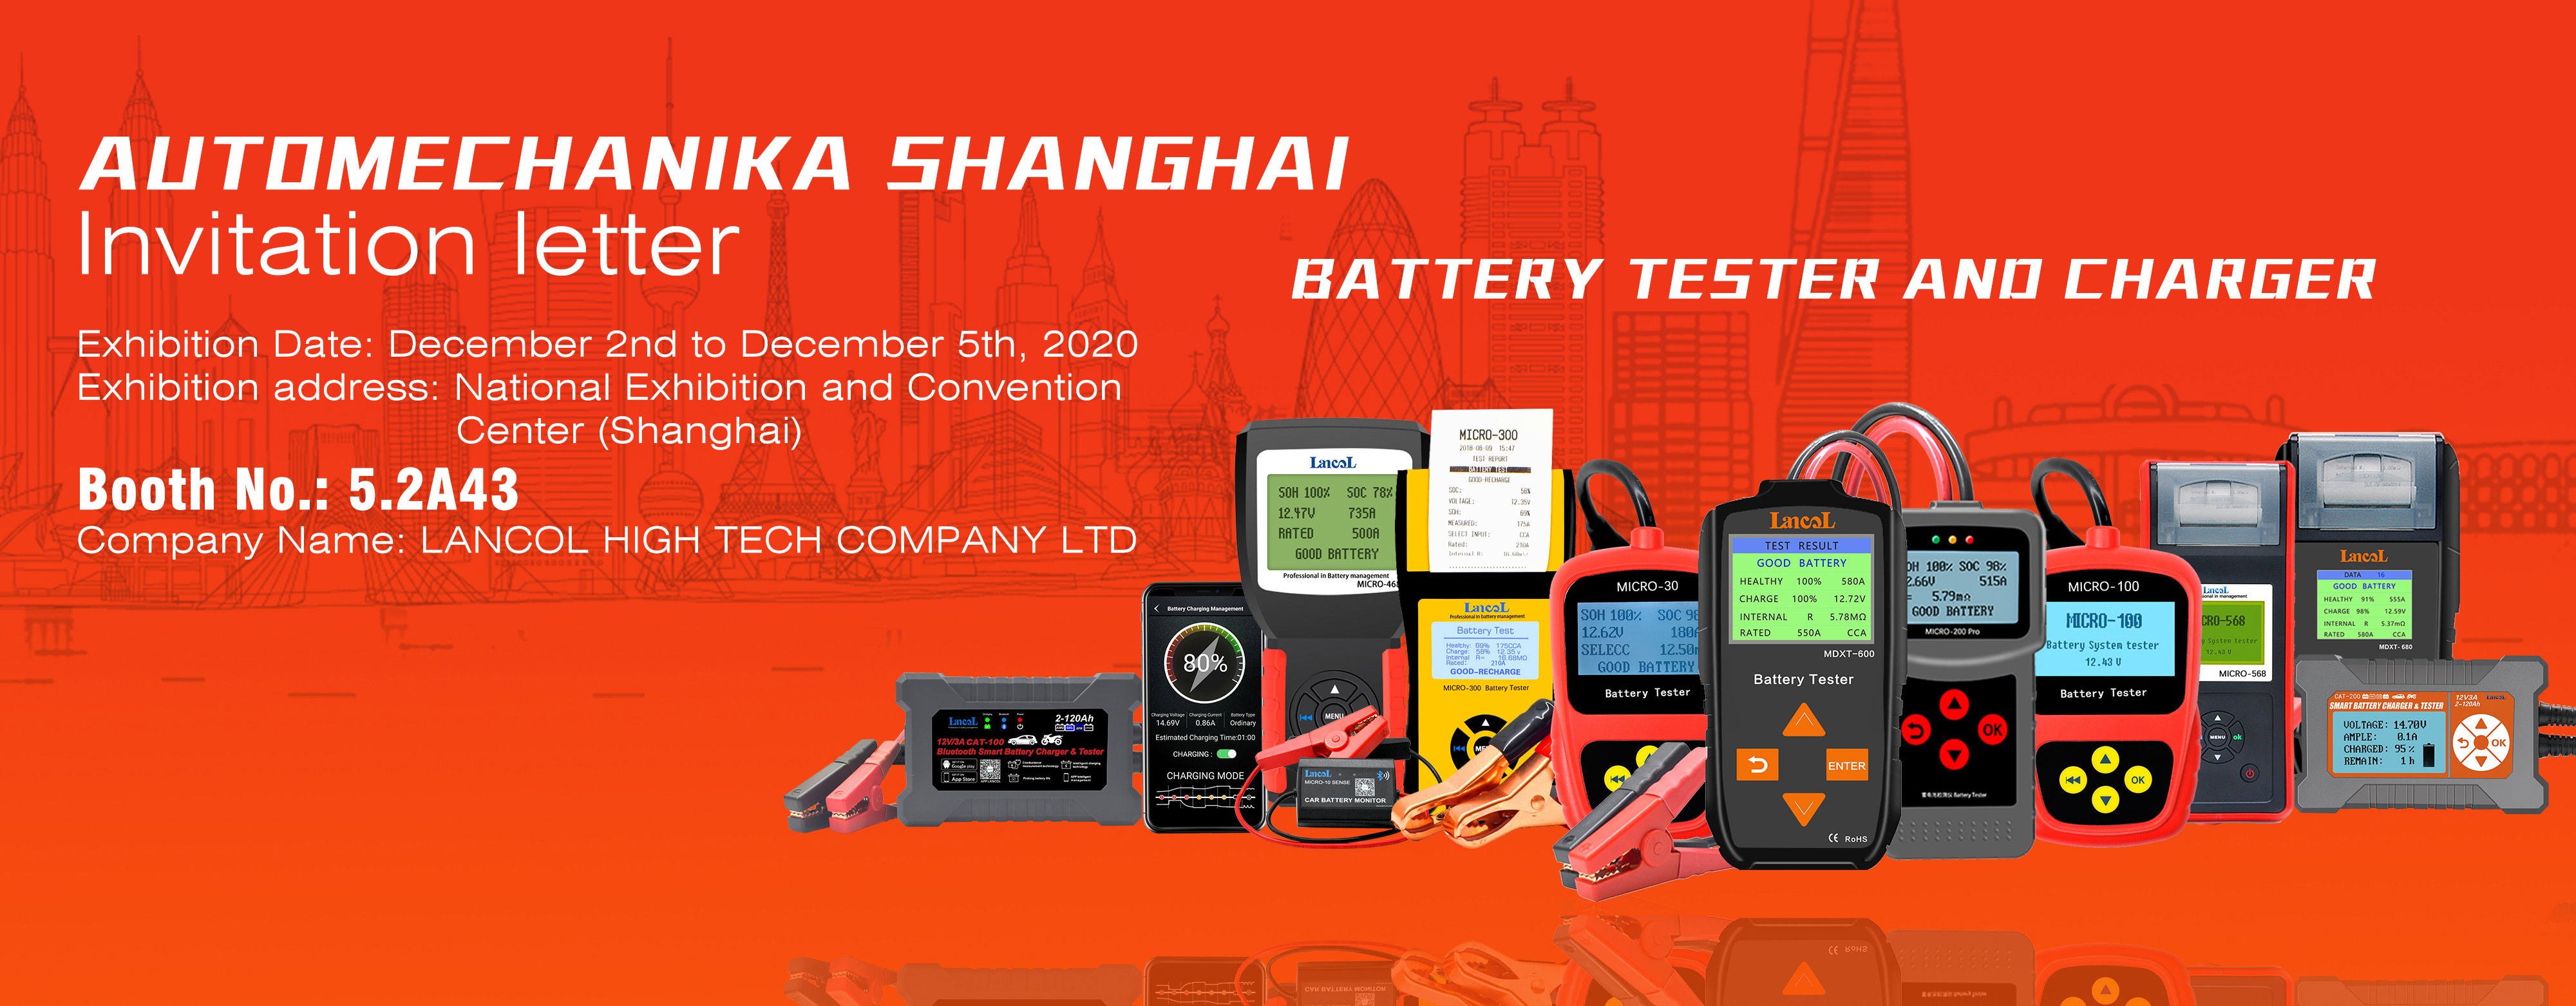 2020 automechanika shanghai invitation